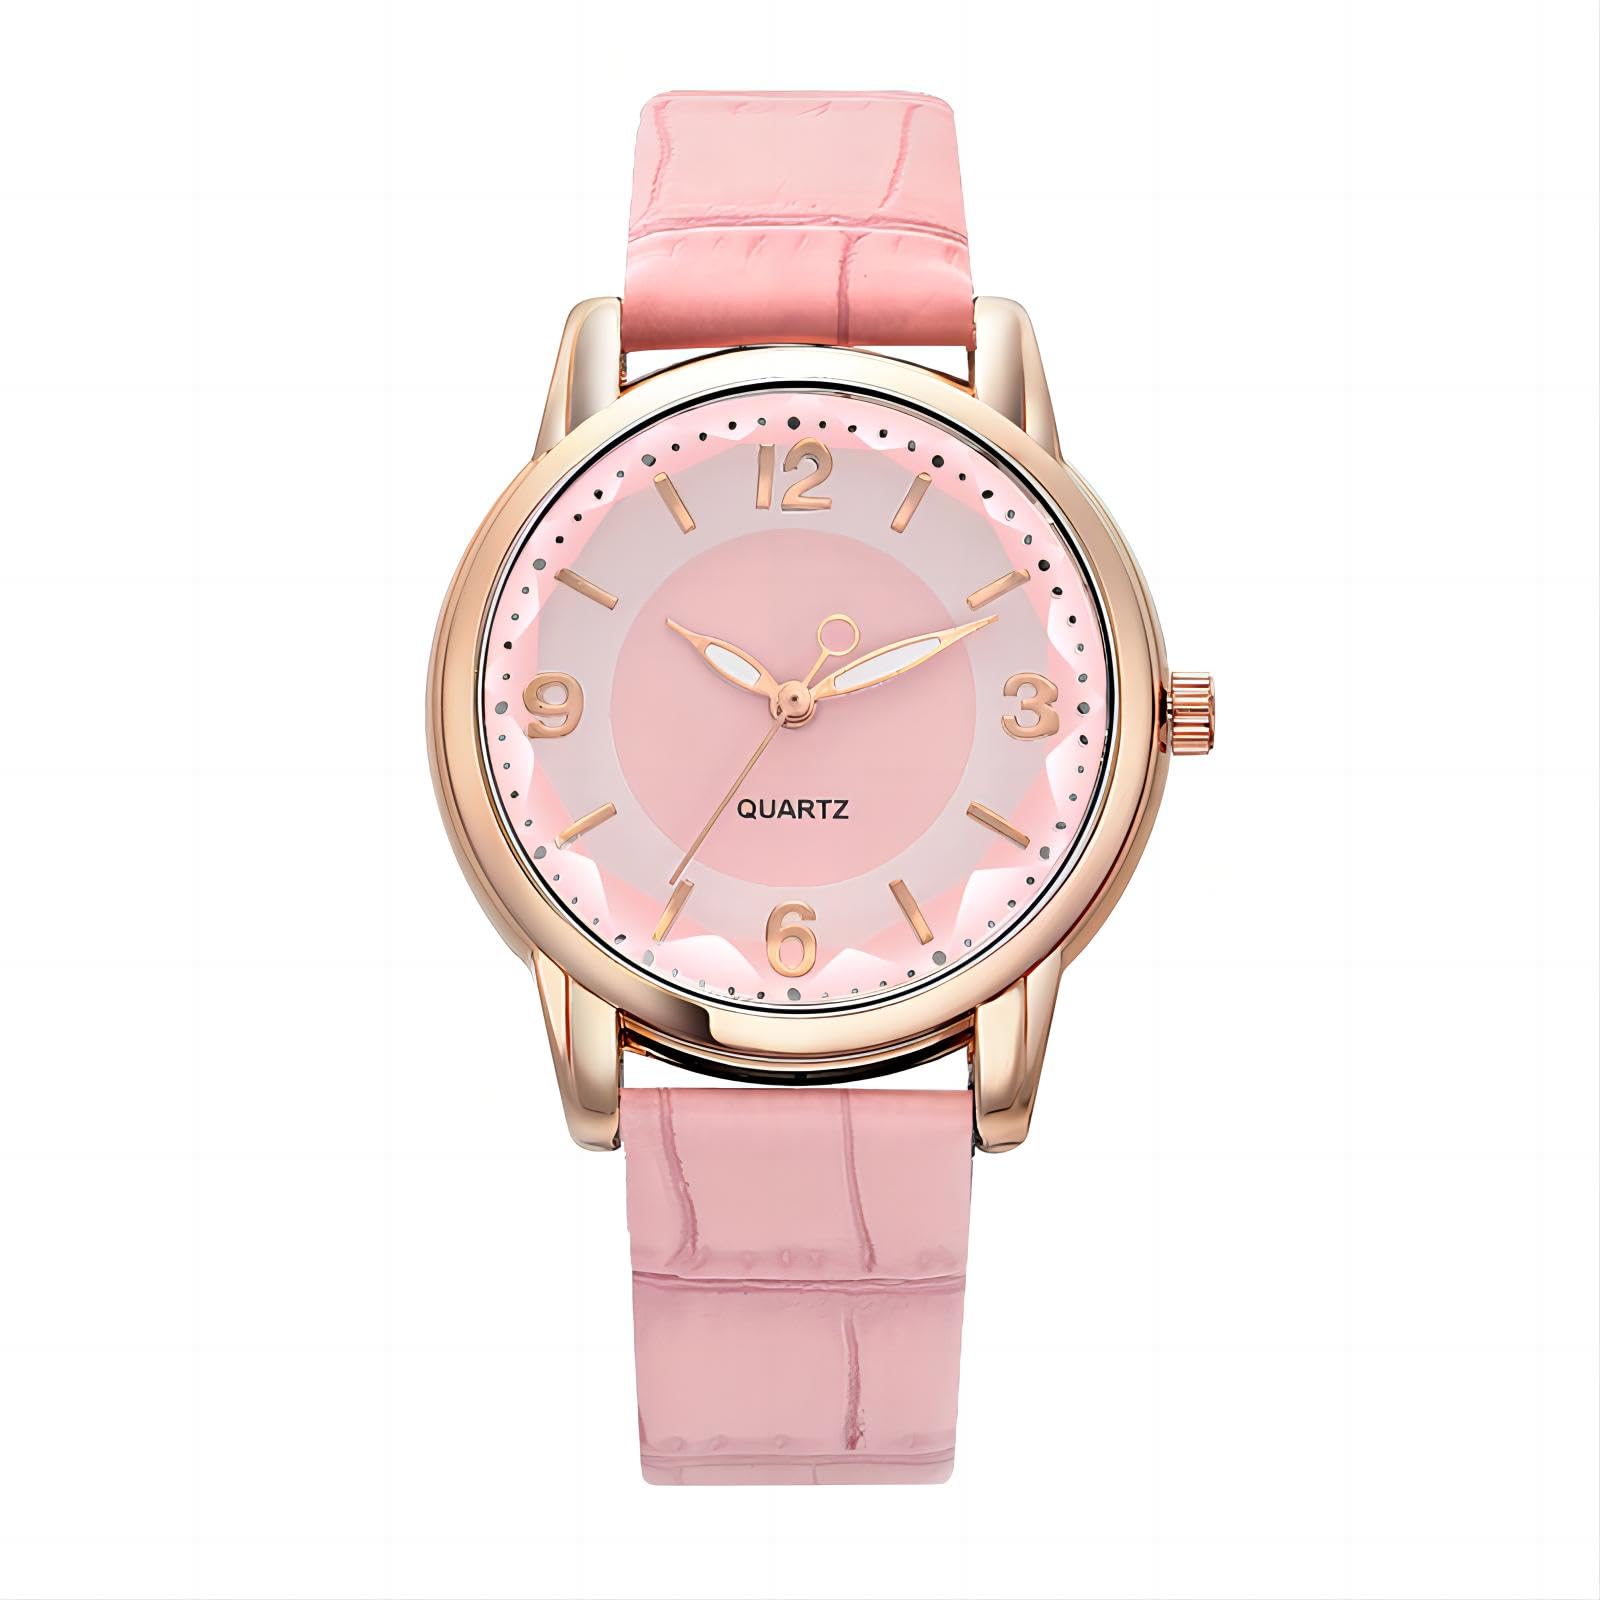 Wrist Watch for Women, Fashion Style Quartz Analog Women's Watch with Leather Strap